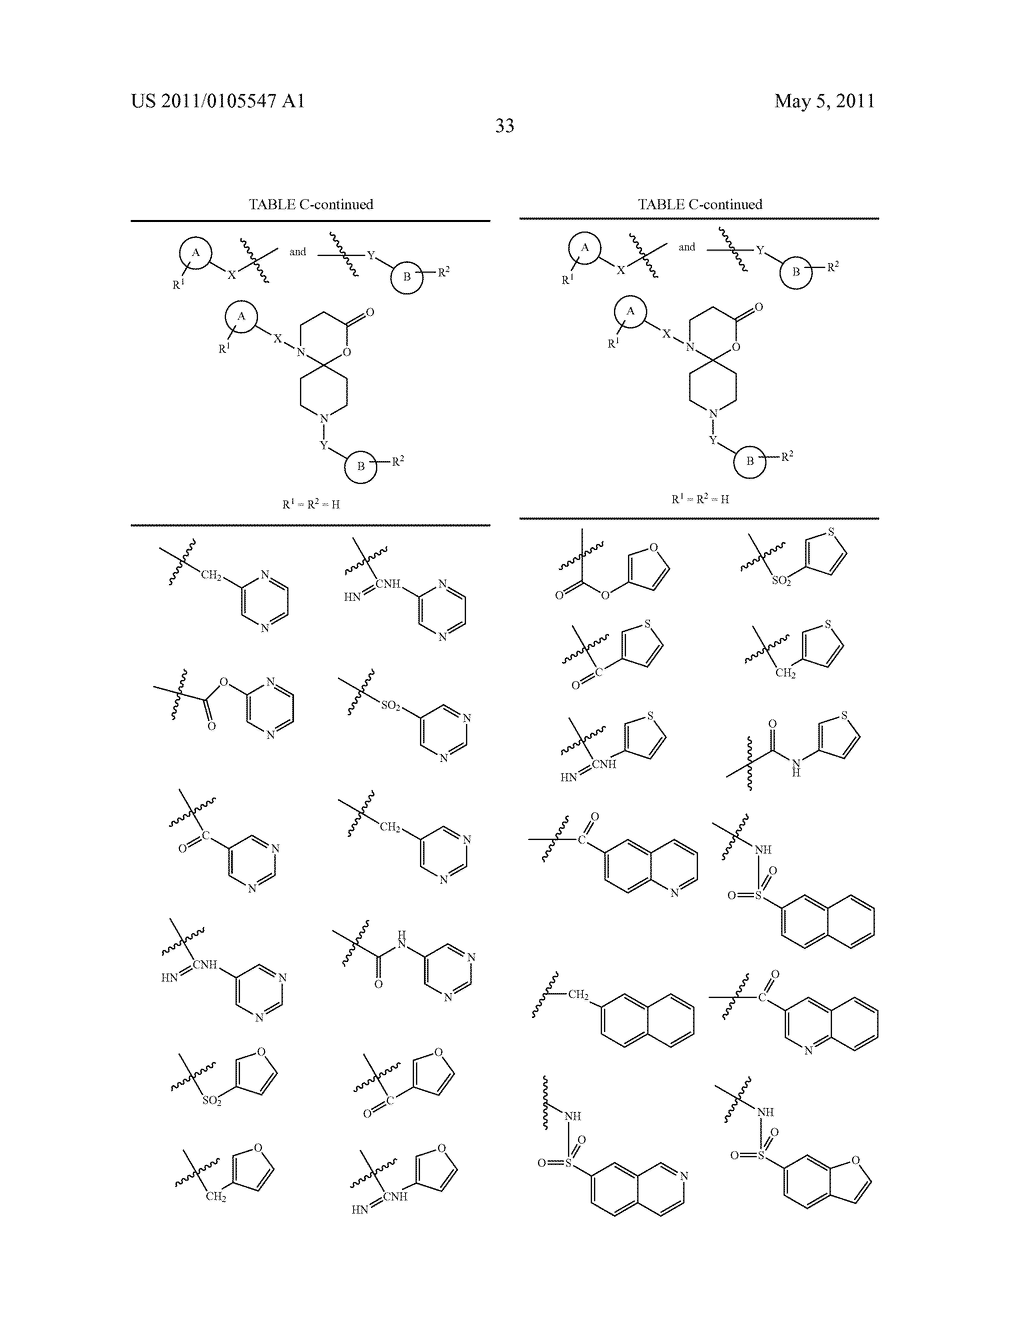 FILAMIN A-BINDING ANTI-INFLAMMATORY ANALGESIC - diagram, schematic, and image 34